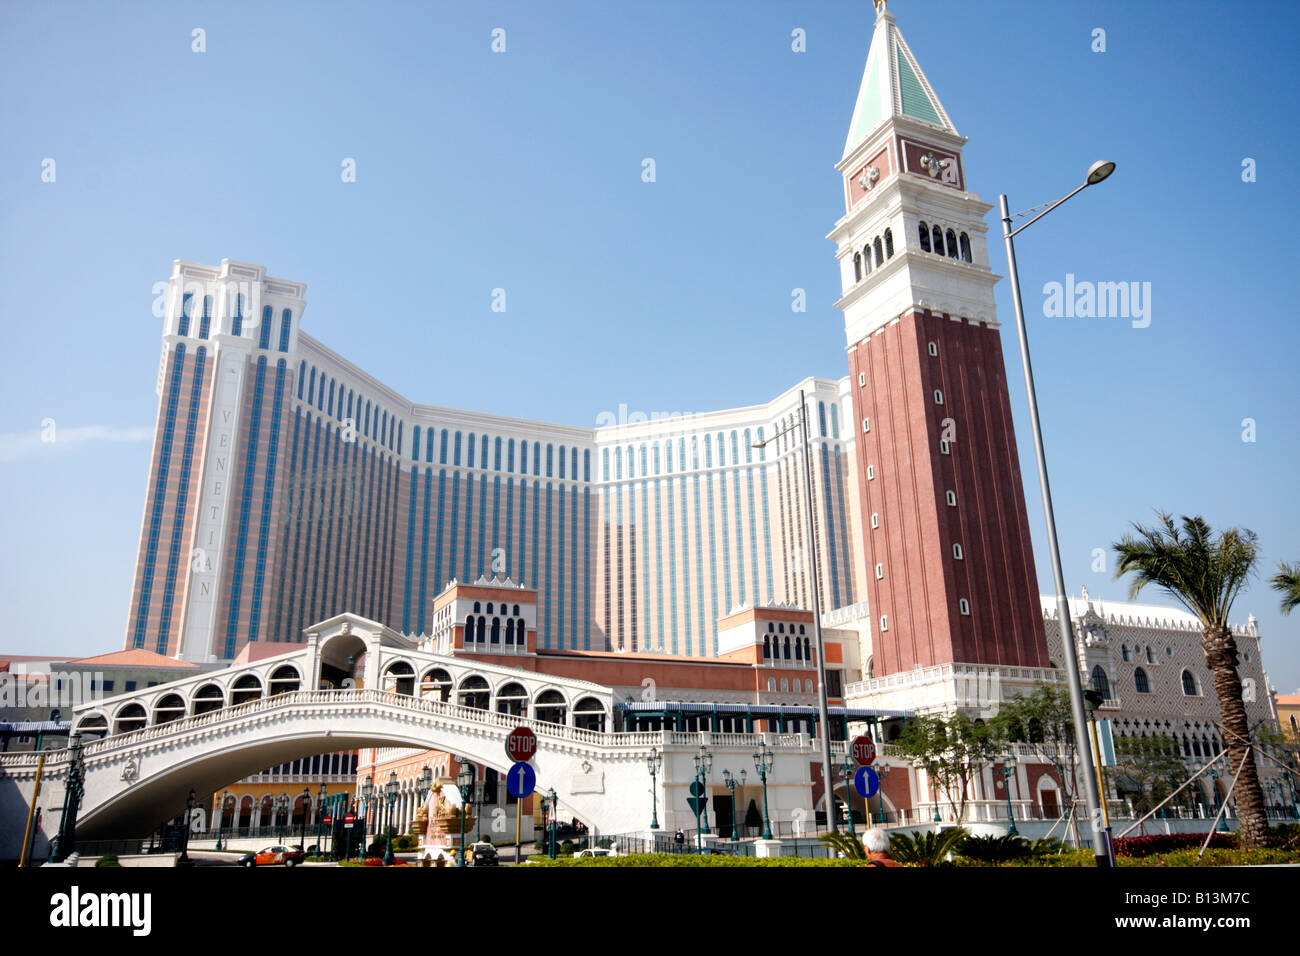 Venetian Hotel and Casino in Macau, South China Stock Photo